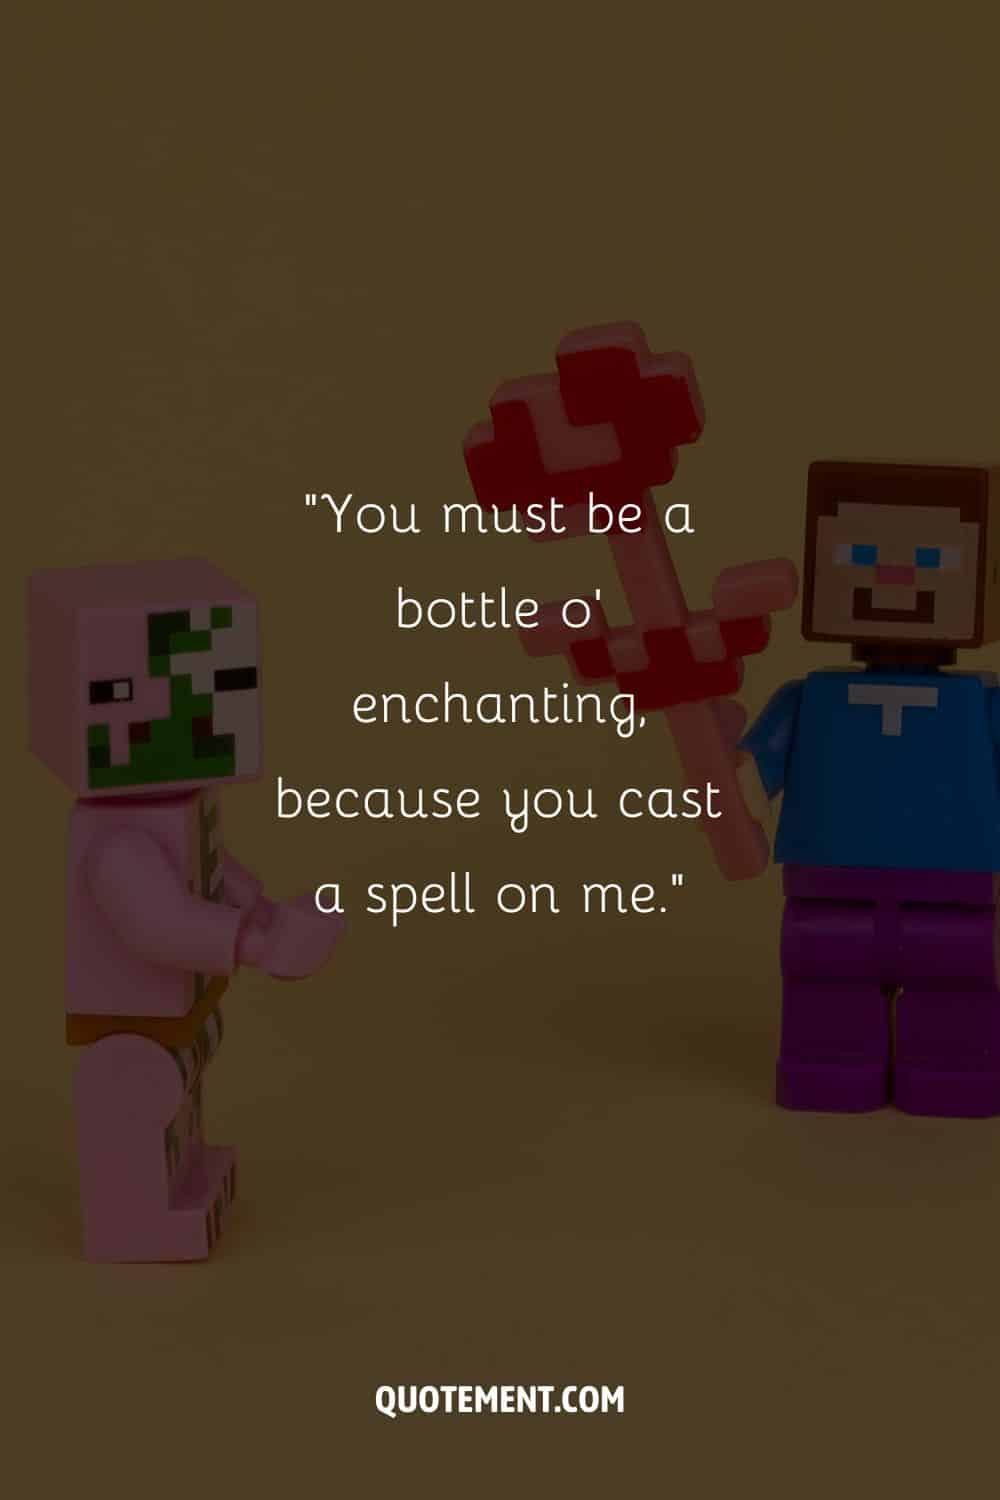 green Minecraft pixel art representing funny minecraft quote